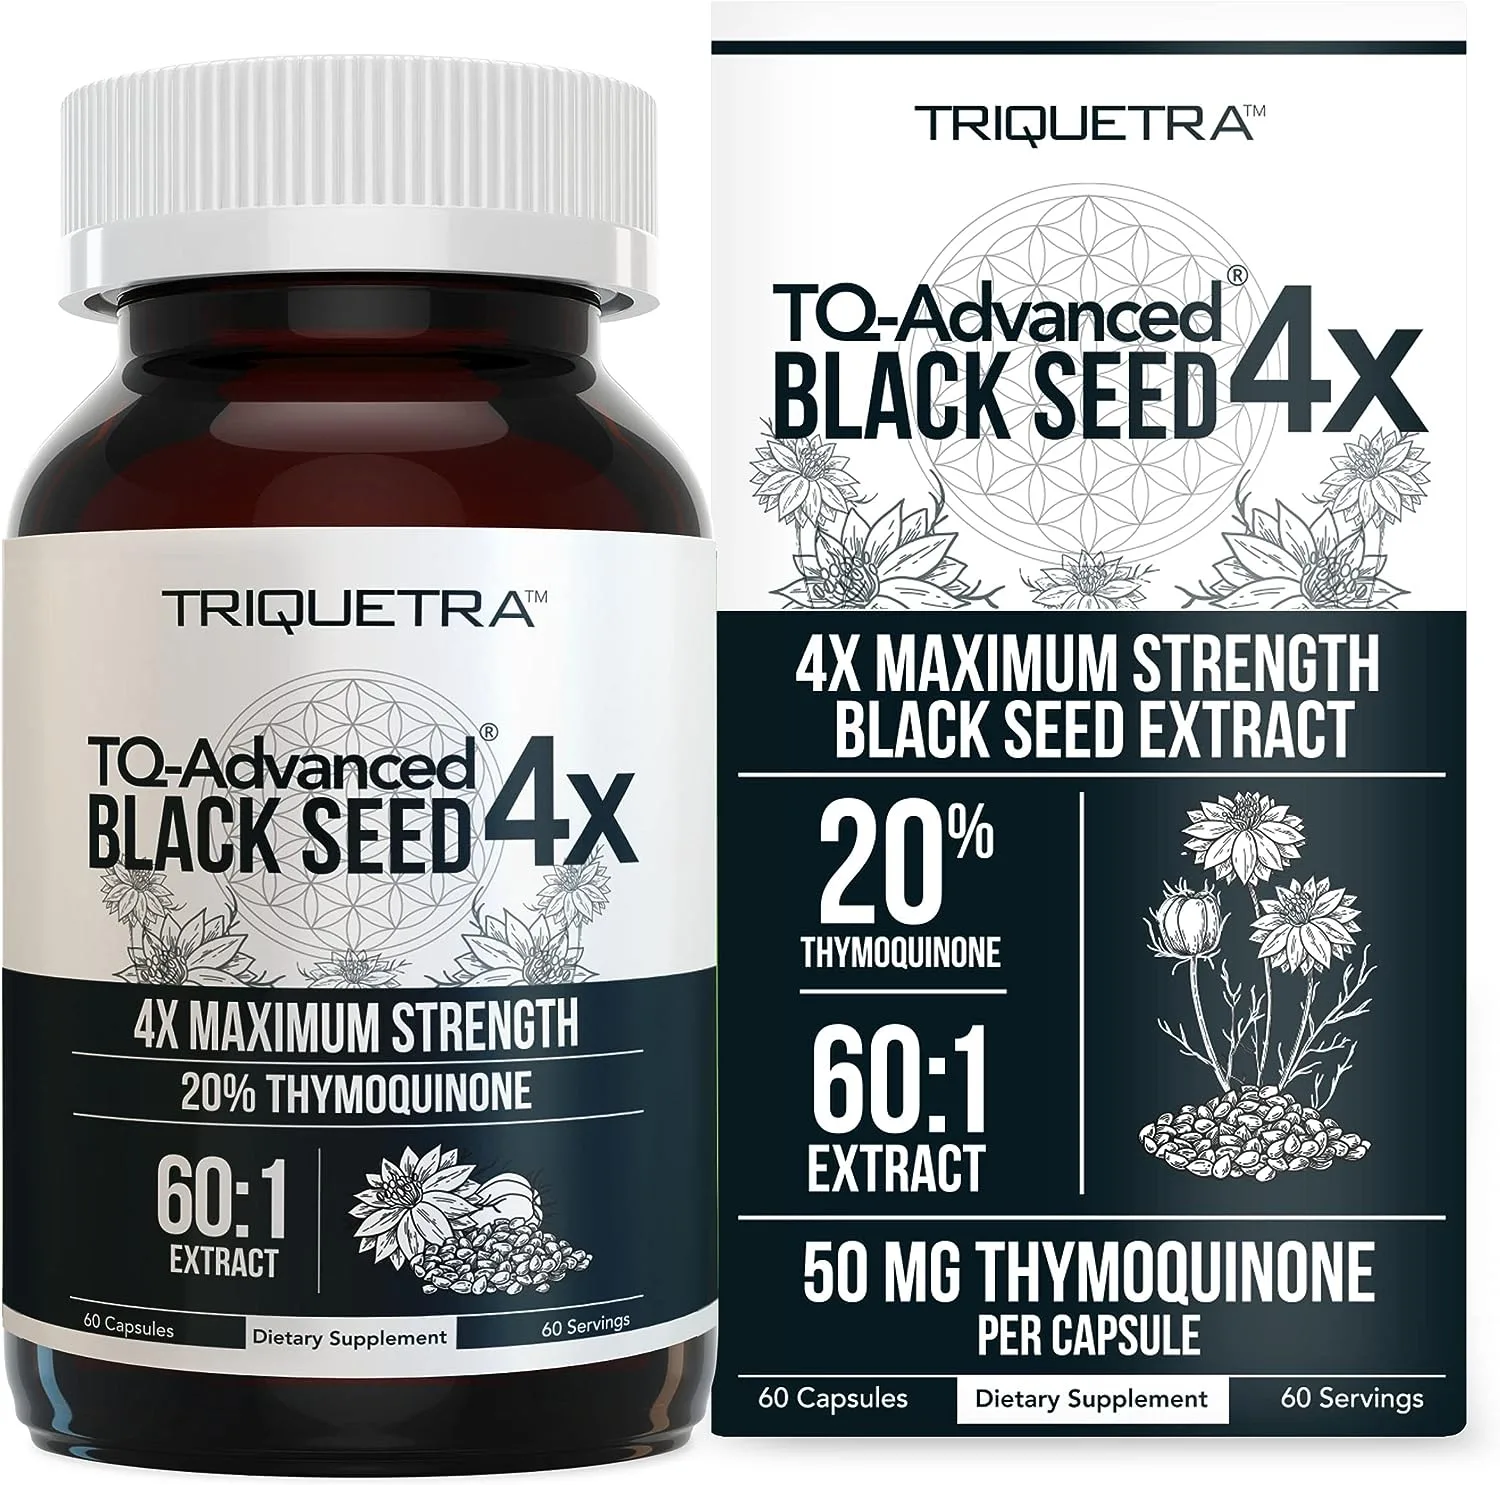 20% Thymoquinone Black Seed Oil Extract Capsules - TQ-Advanced 4X